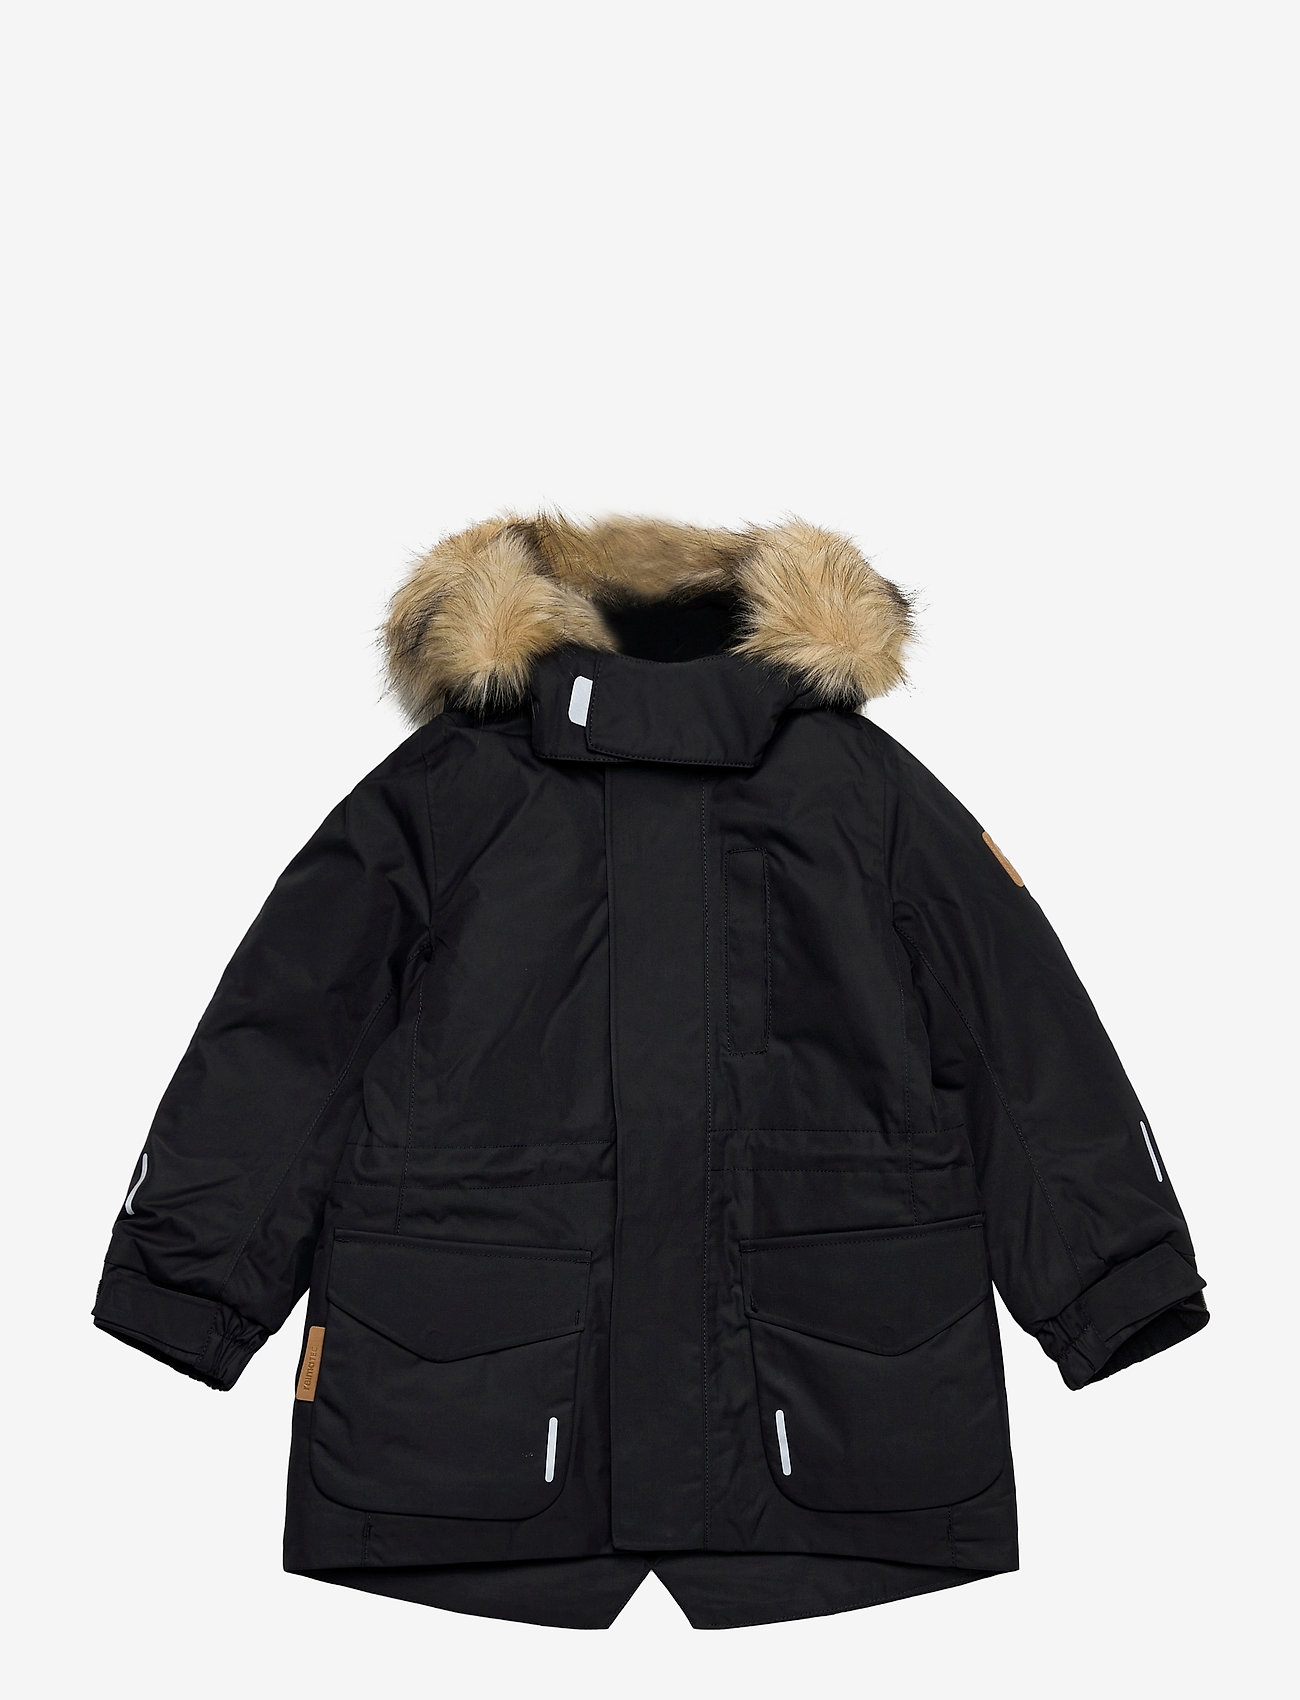 Reima - Reimatec winter jacket, Naapuri - insulated jackets - black - 0